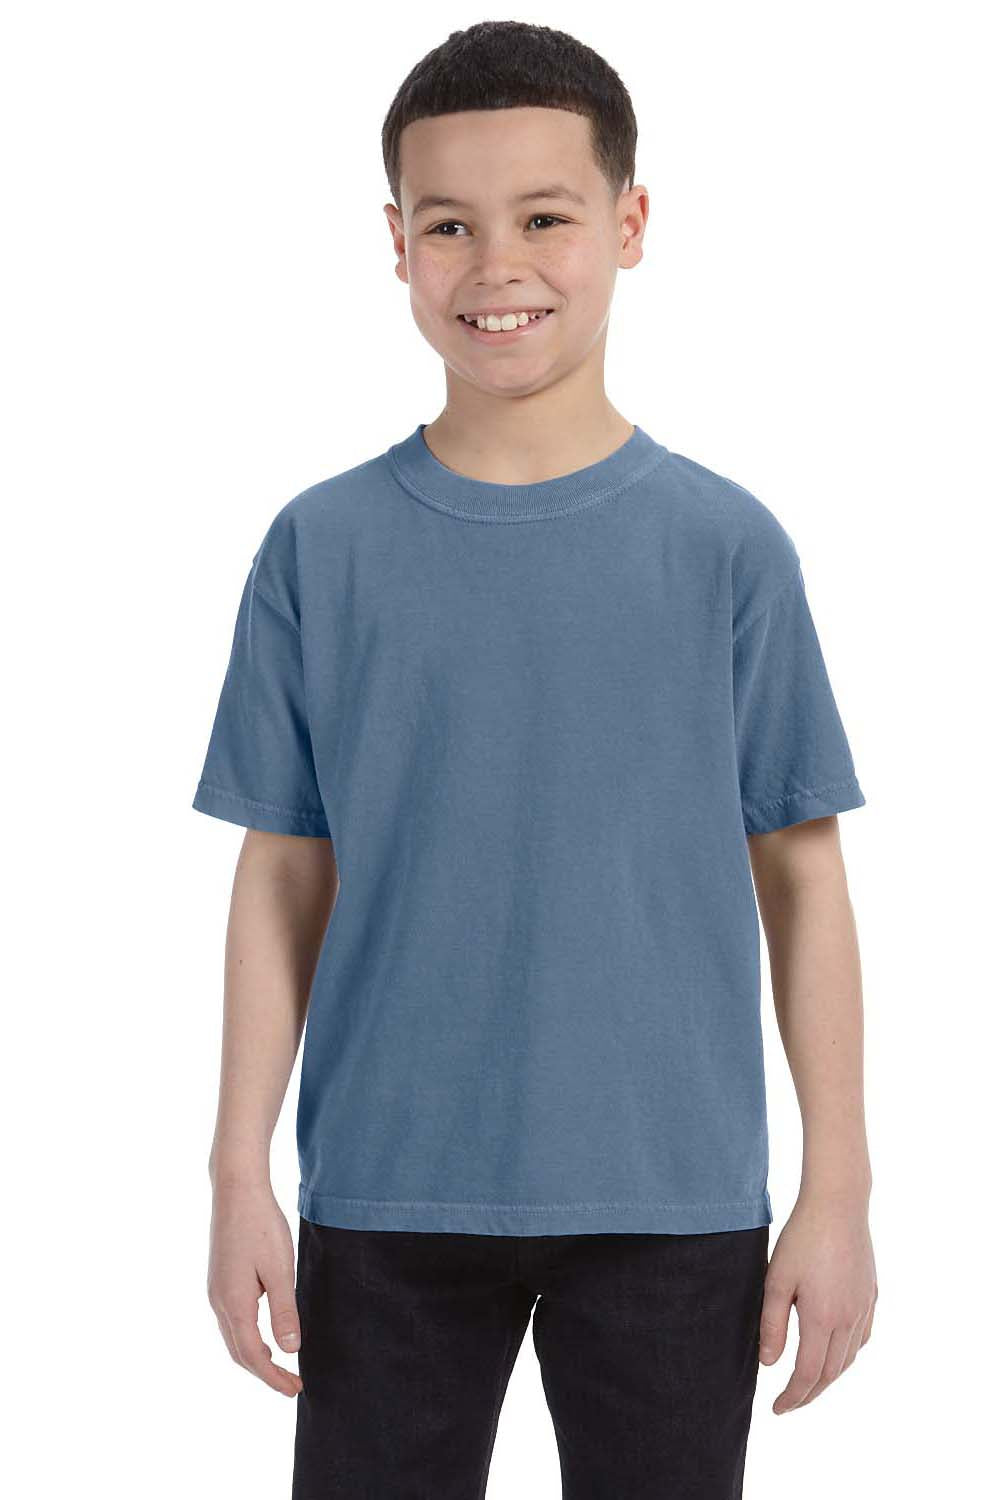 Comfort Colors C9018 Youth Short Sleeve Crewneck T-Shirt Blue Jean Front